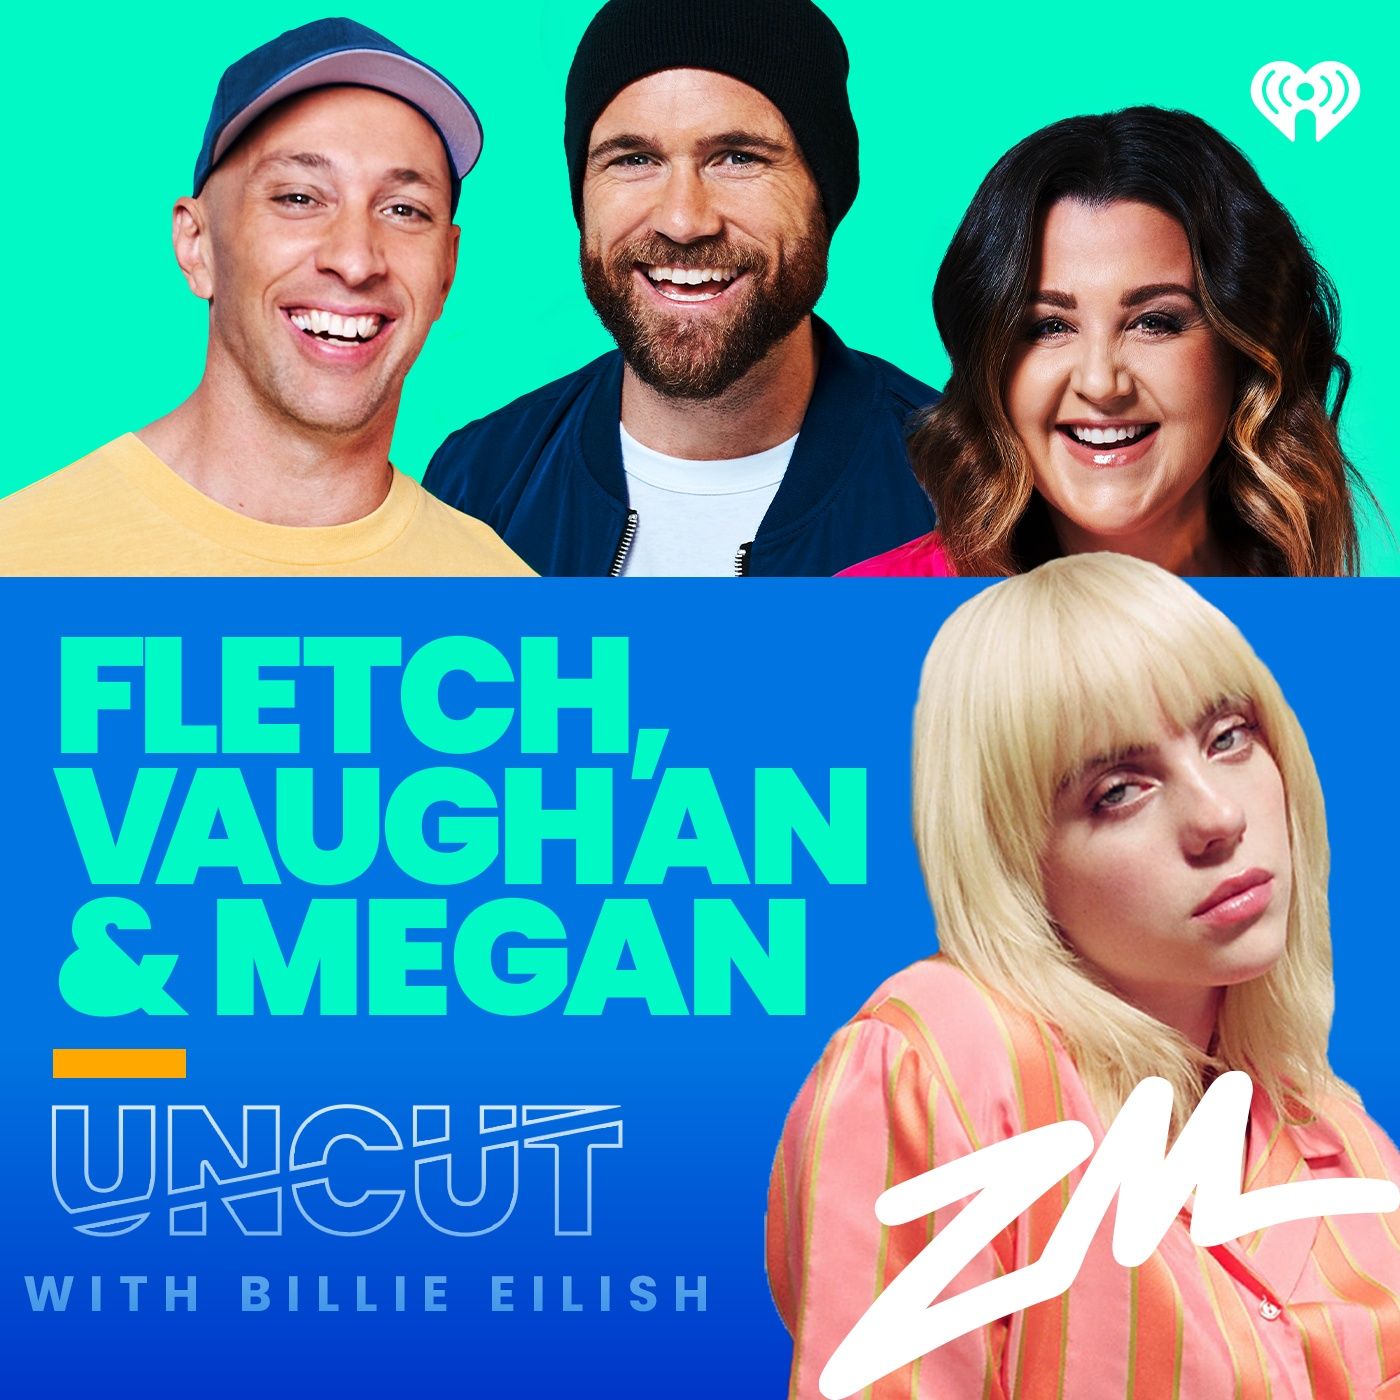 Fletch, Vaughan & Megan Podcast - Billie Eilish Uncut!